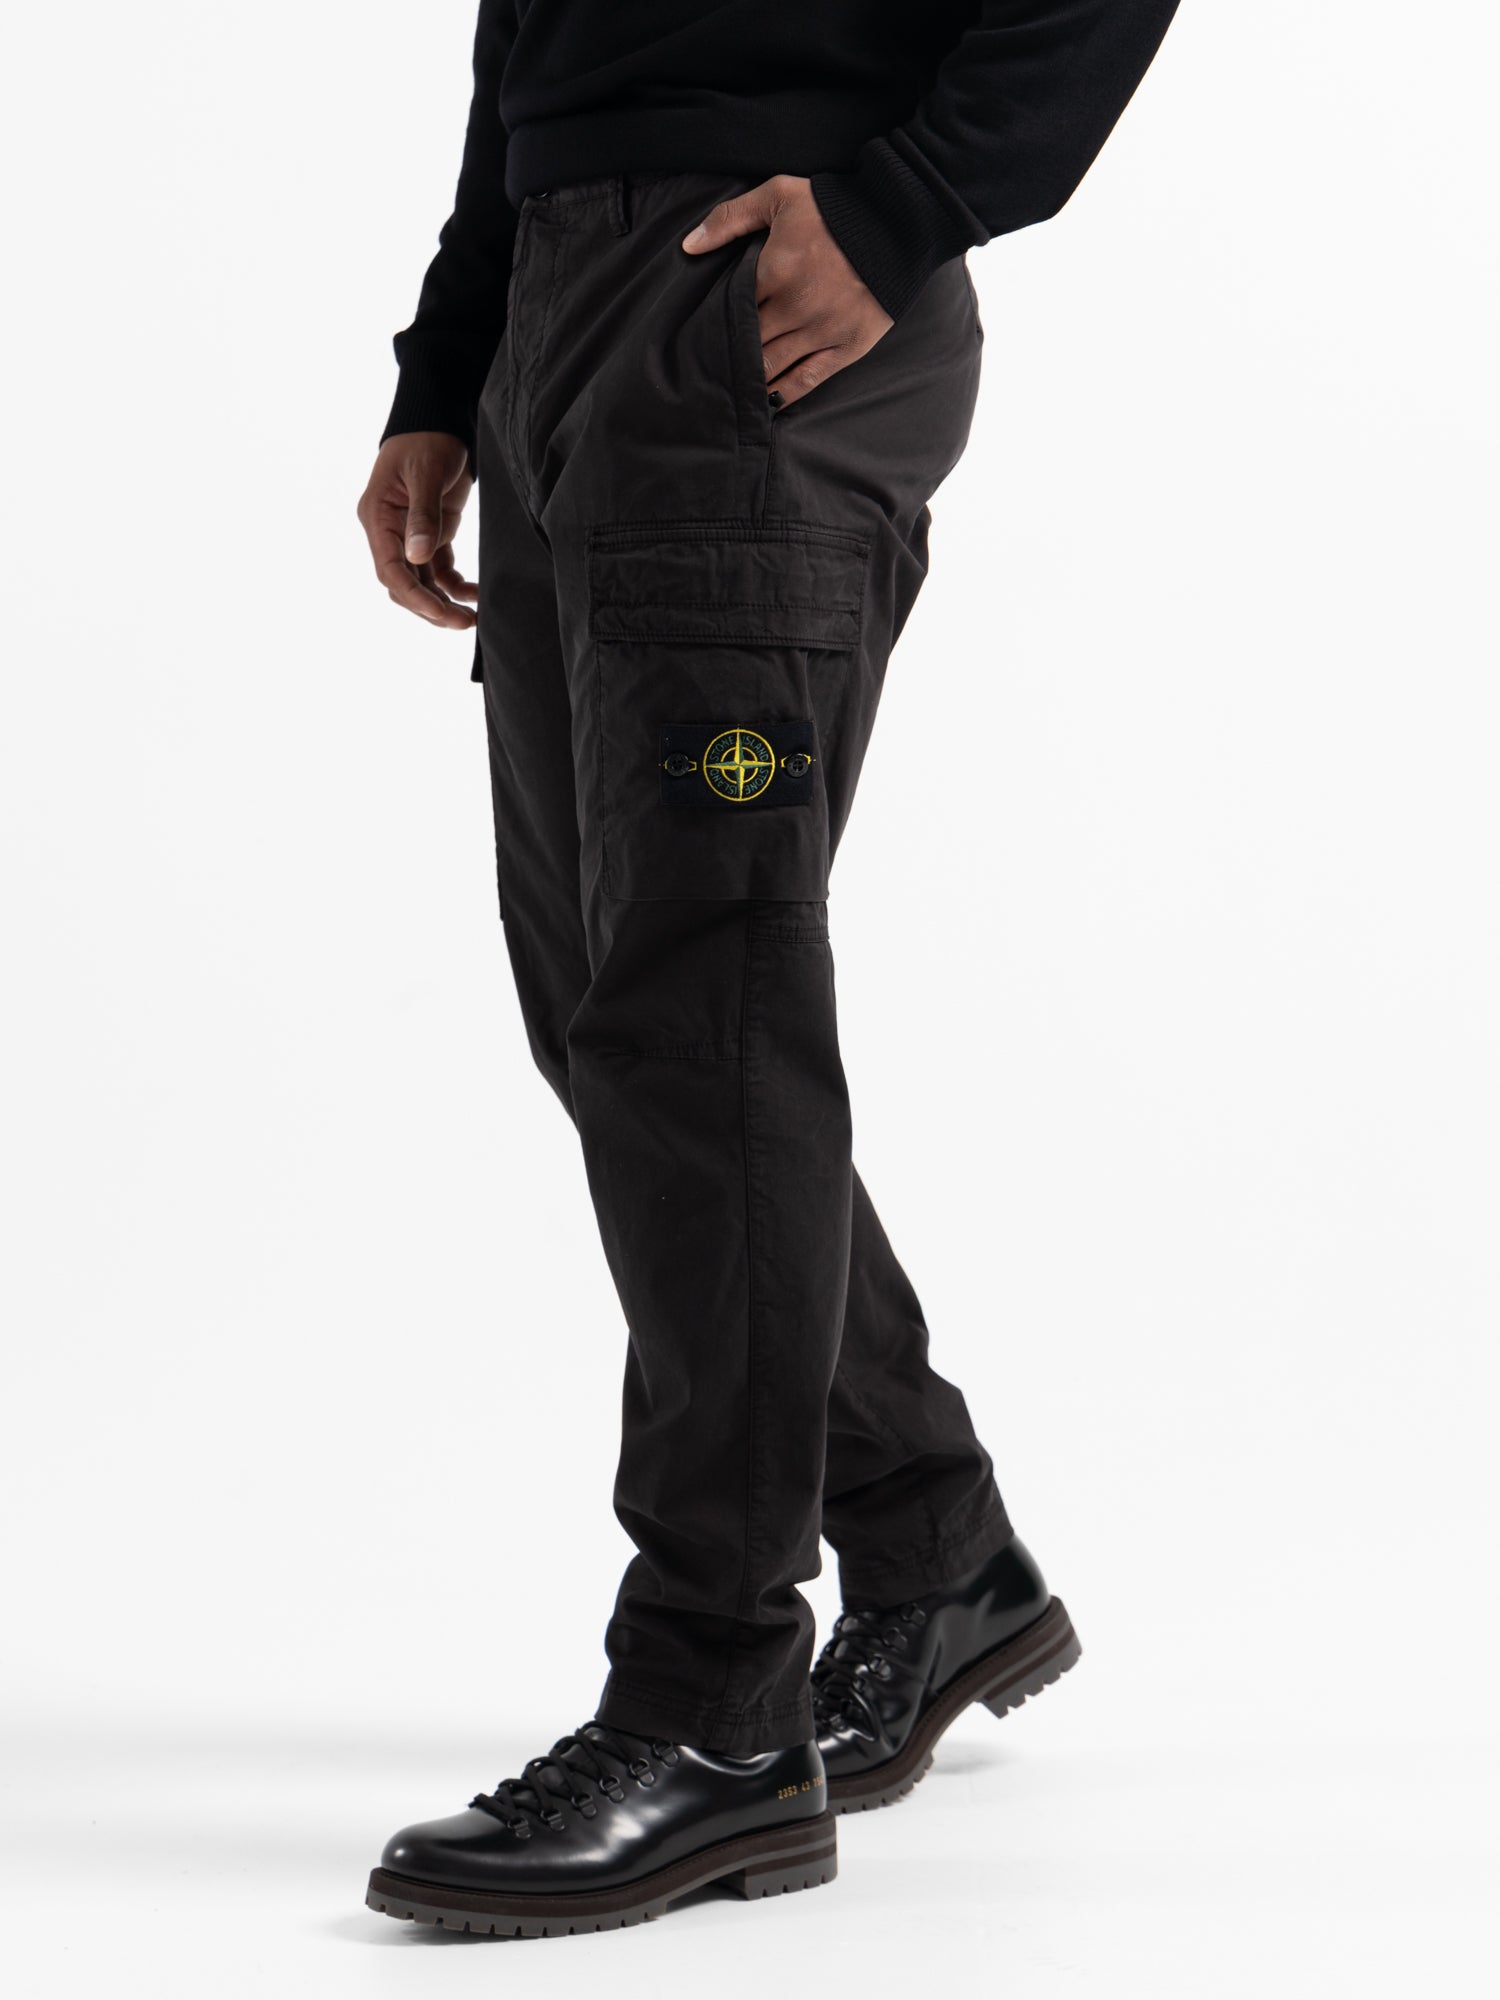 Mens Black Cargo Trousers Fashion Drawstring Hip Hop Harem Cropped Casual  Pants | eBay